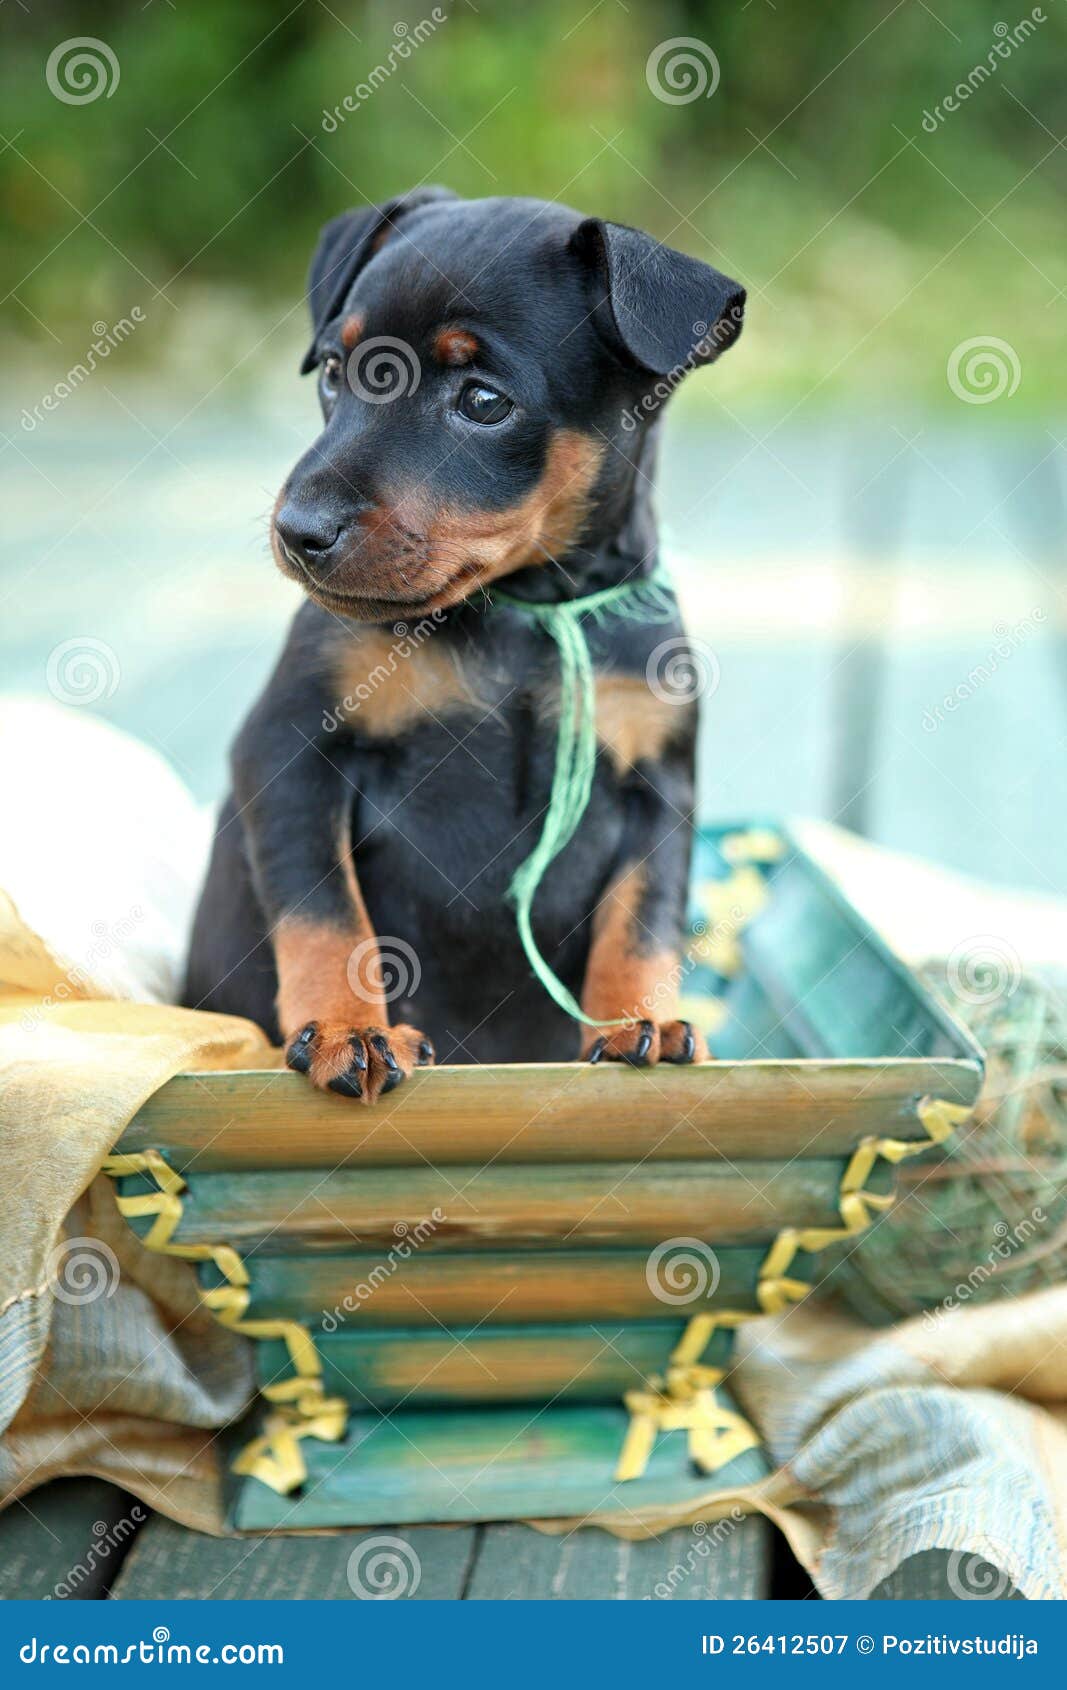 1,675 Black Miniature Pinscher Puppy Stock Photos - Free & Royalty 